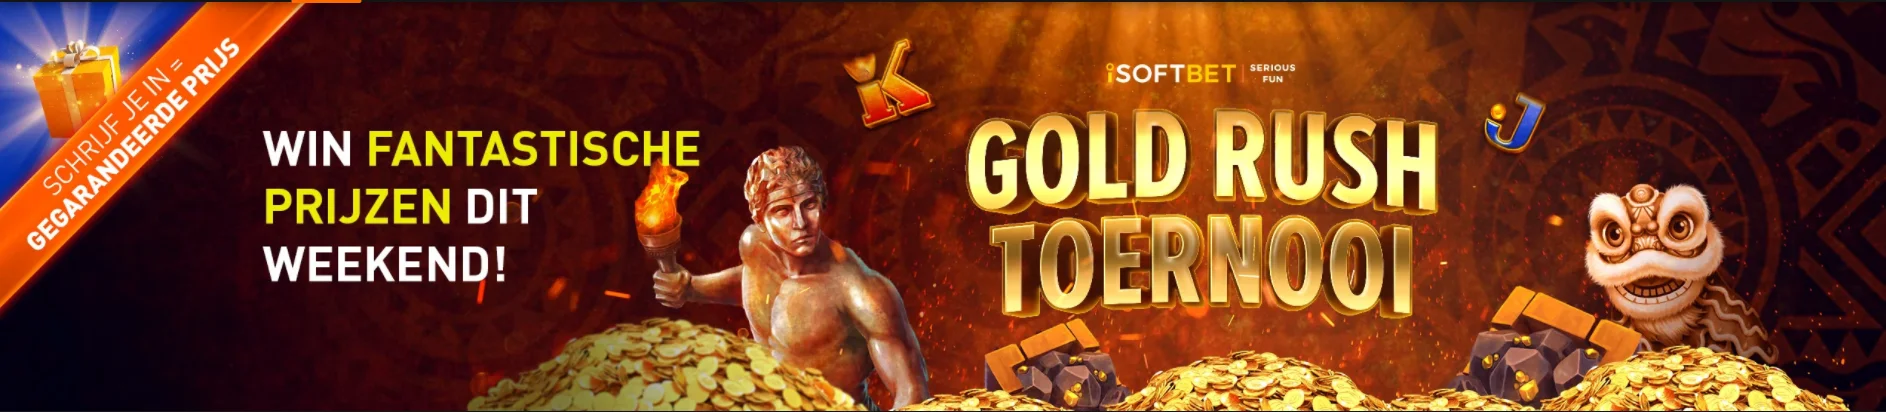 Gold Rush Goud toernooi Casino 777 online Slot gokkast Jackpot Geldkluis tokens 2022